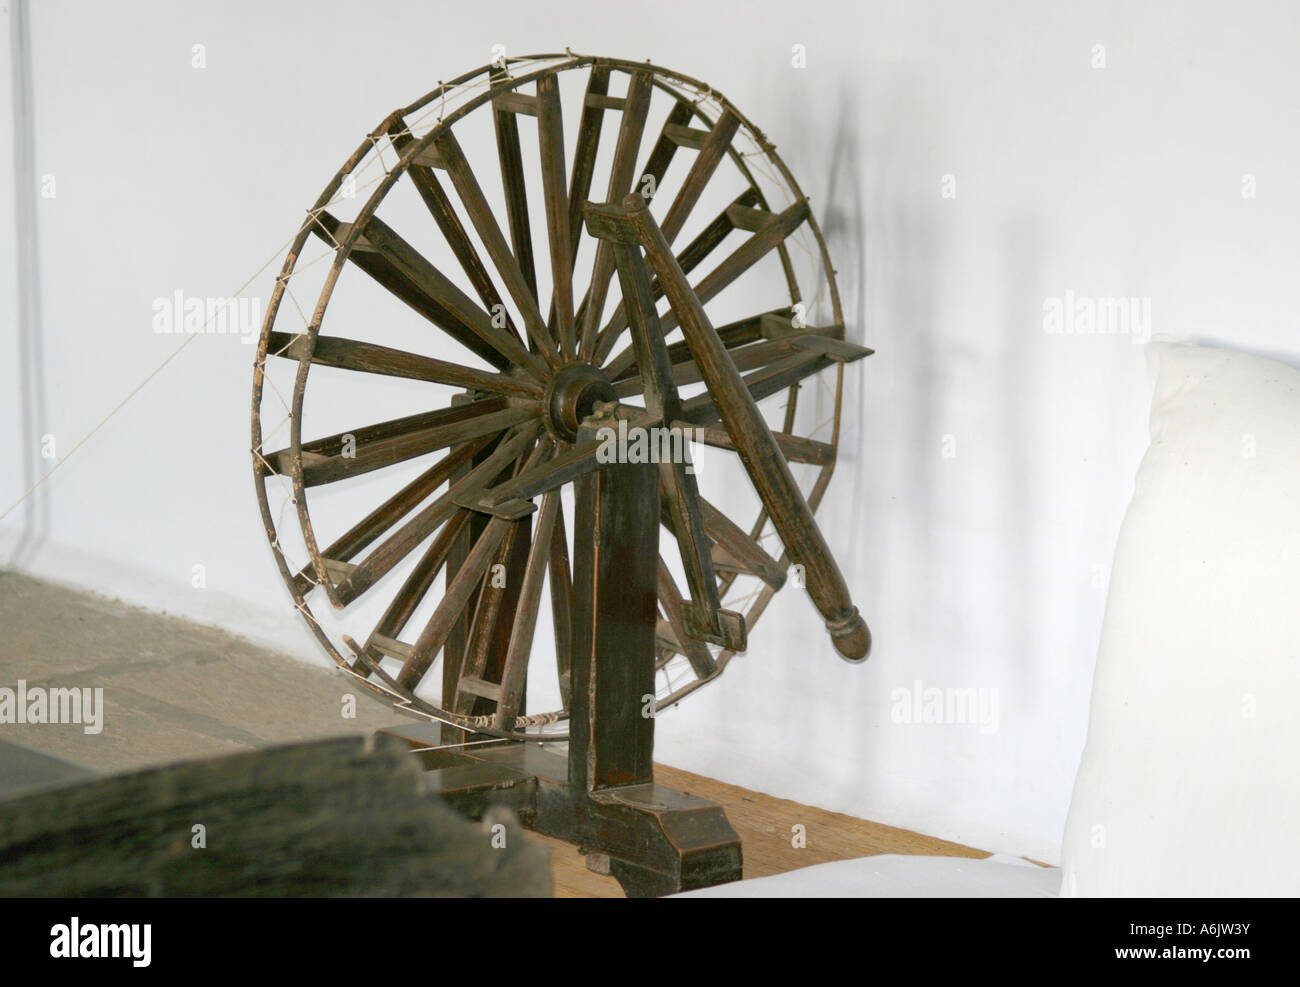 Gandhi's spinning wheel on view at the Sabarmati Ashram  in Ahmedabad, Gujarat, India. Stock Photo